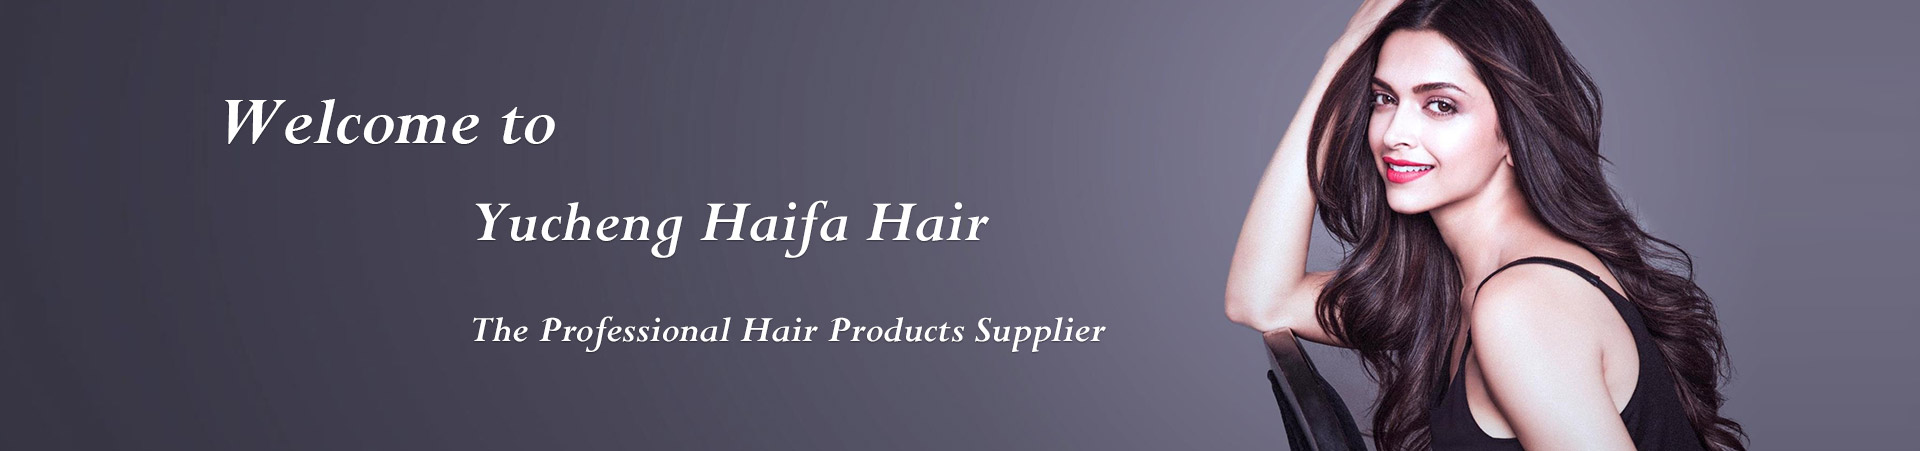 Yucheng Haifa Hair